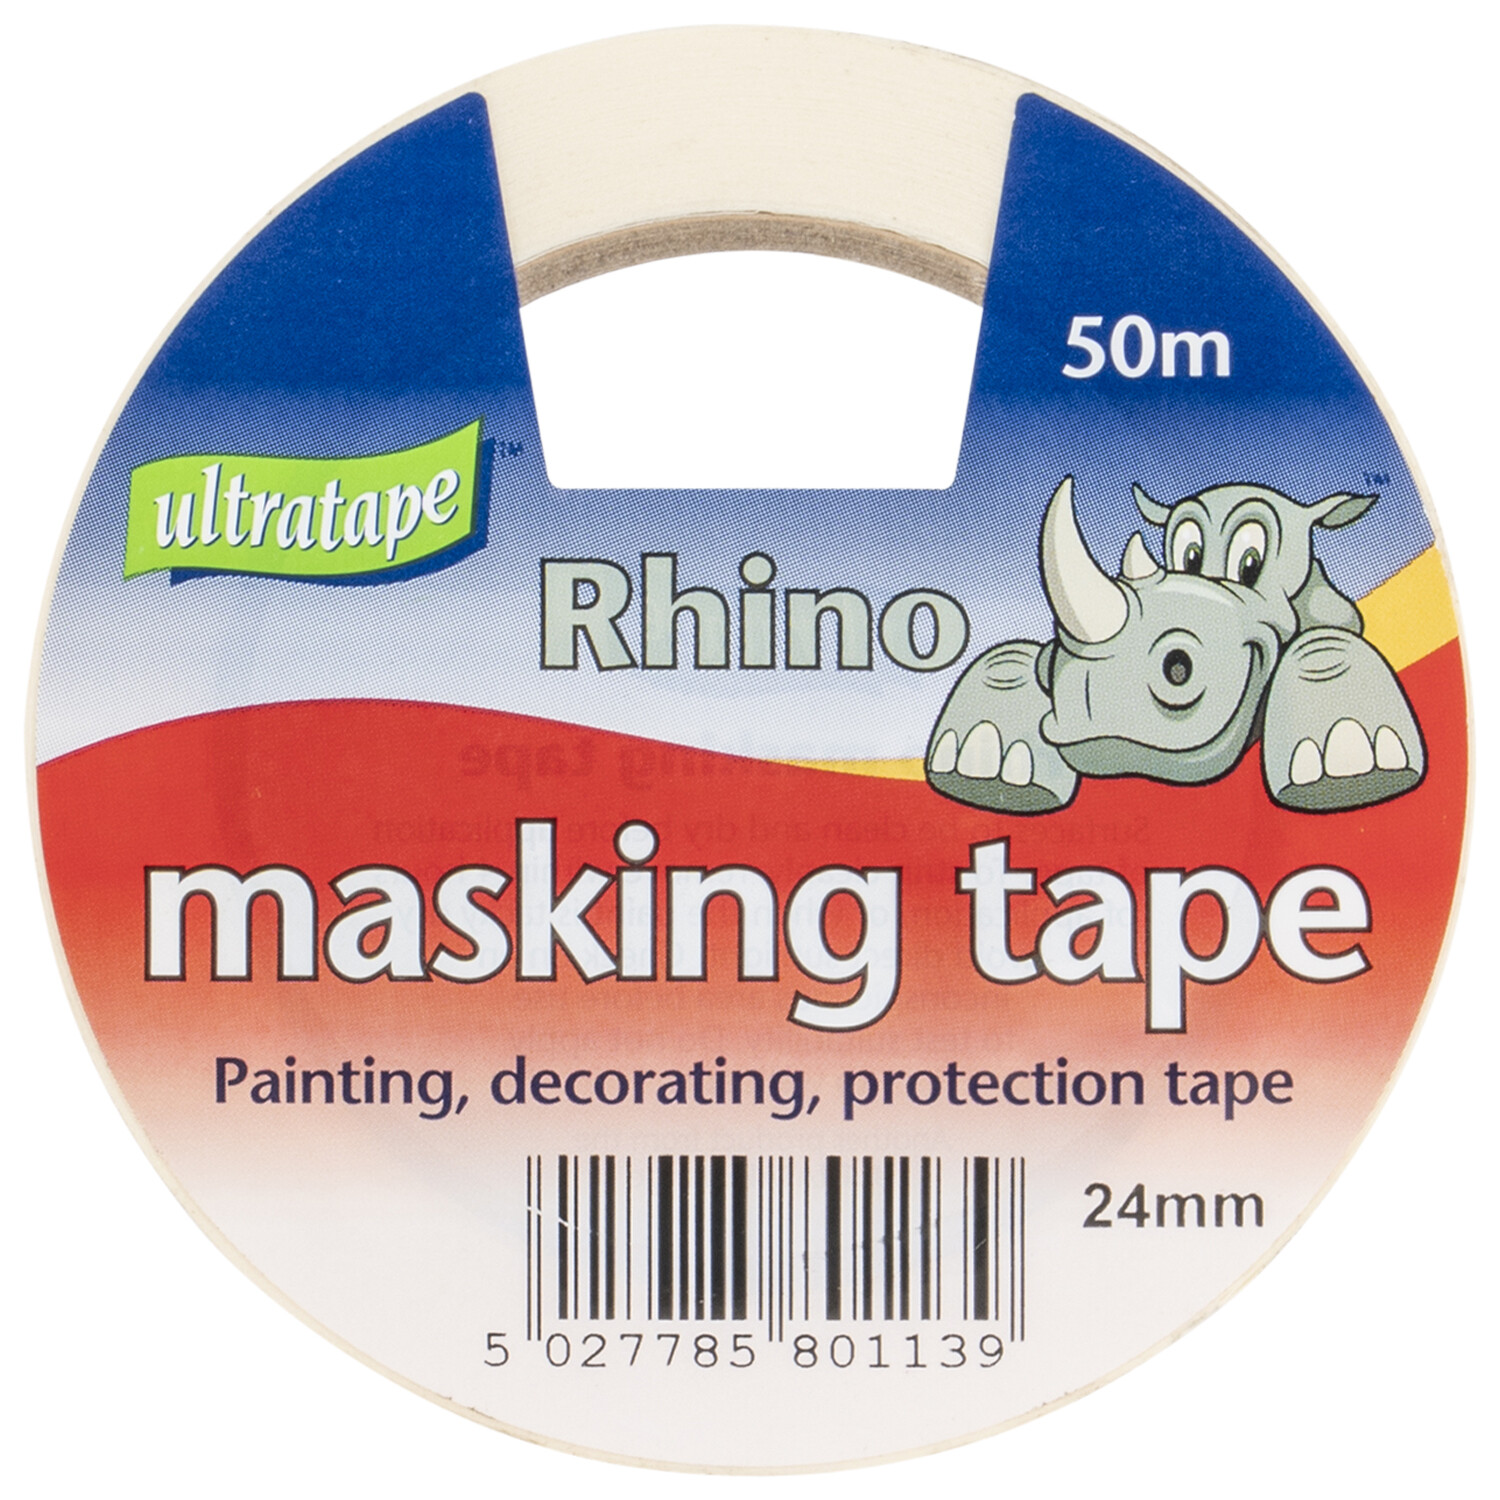 Ultratape Rhino 50m x 24mm Masking Tape Image